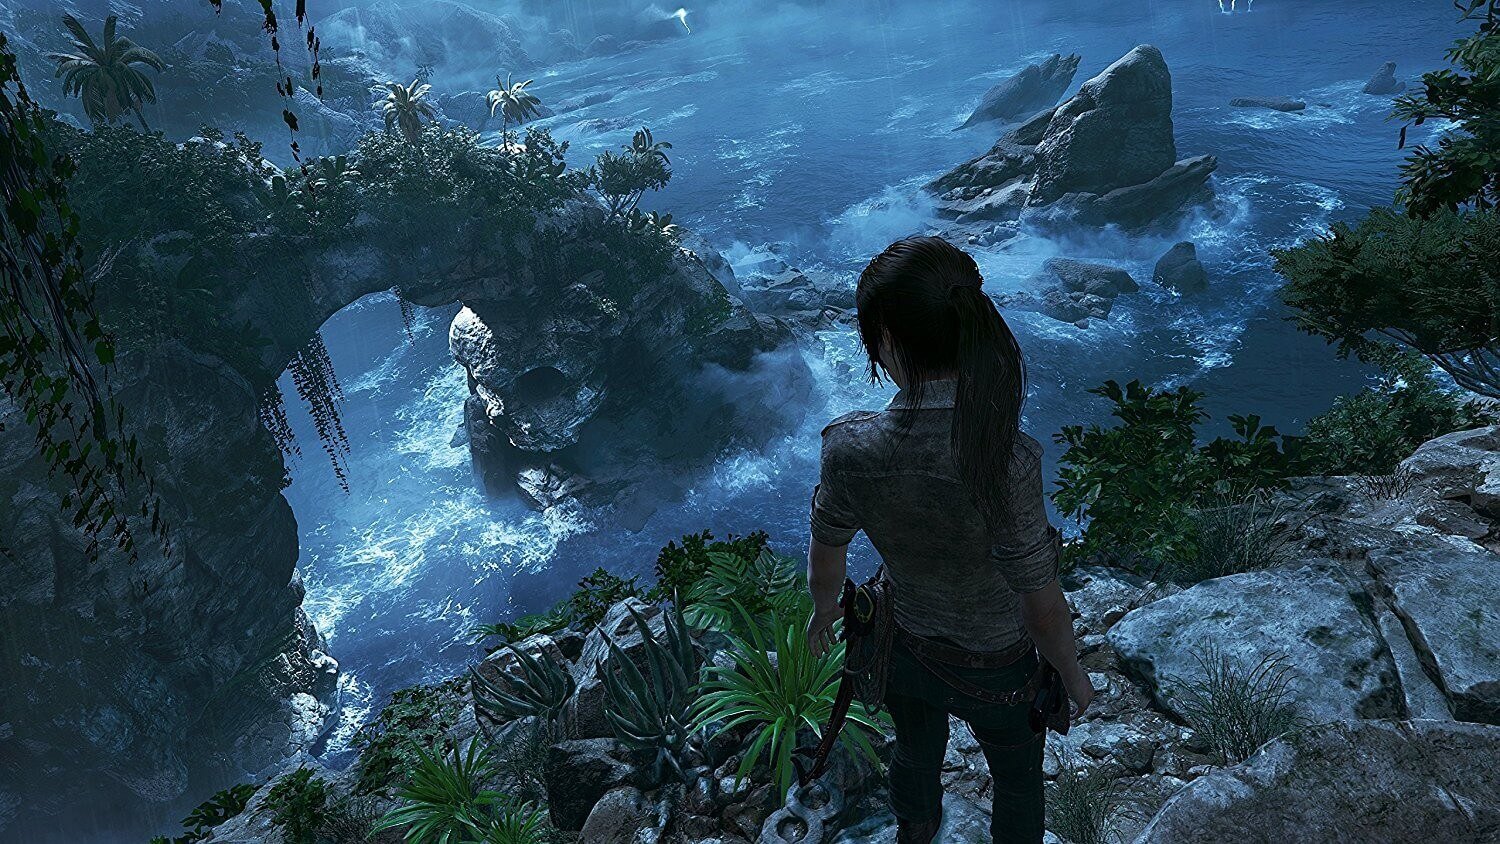 Shadow of the Tomb Raider - Croft Edition